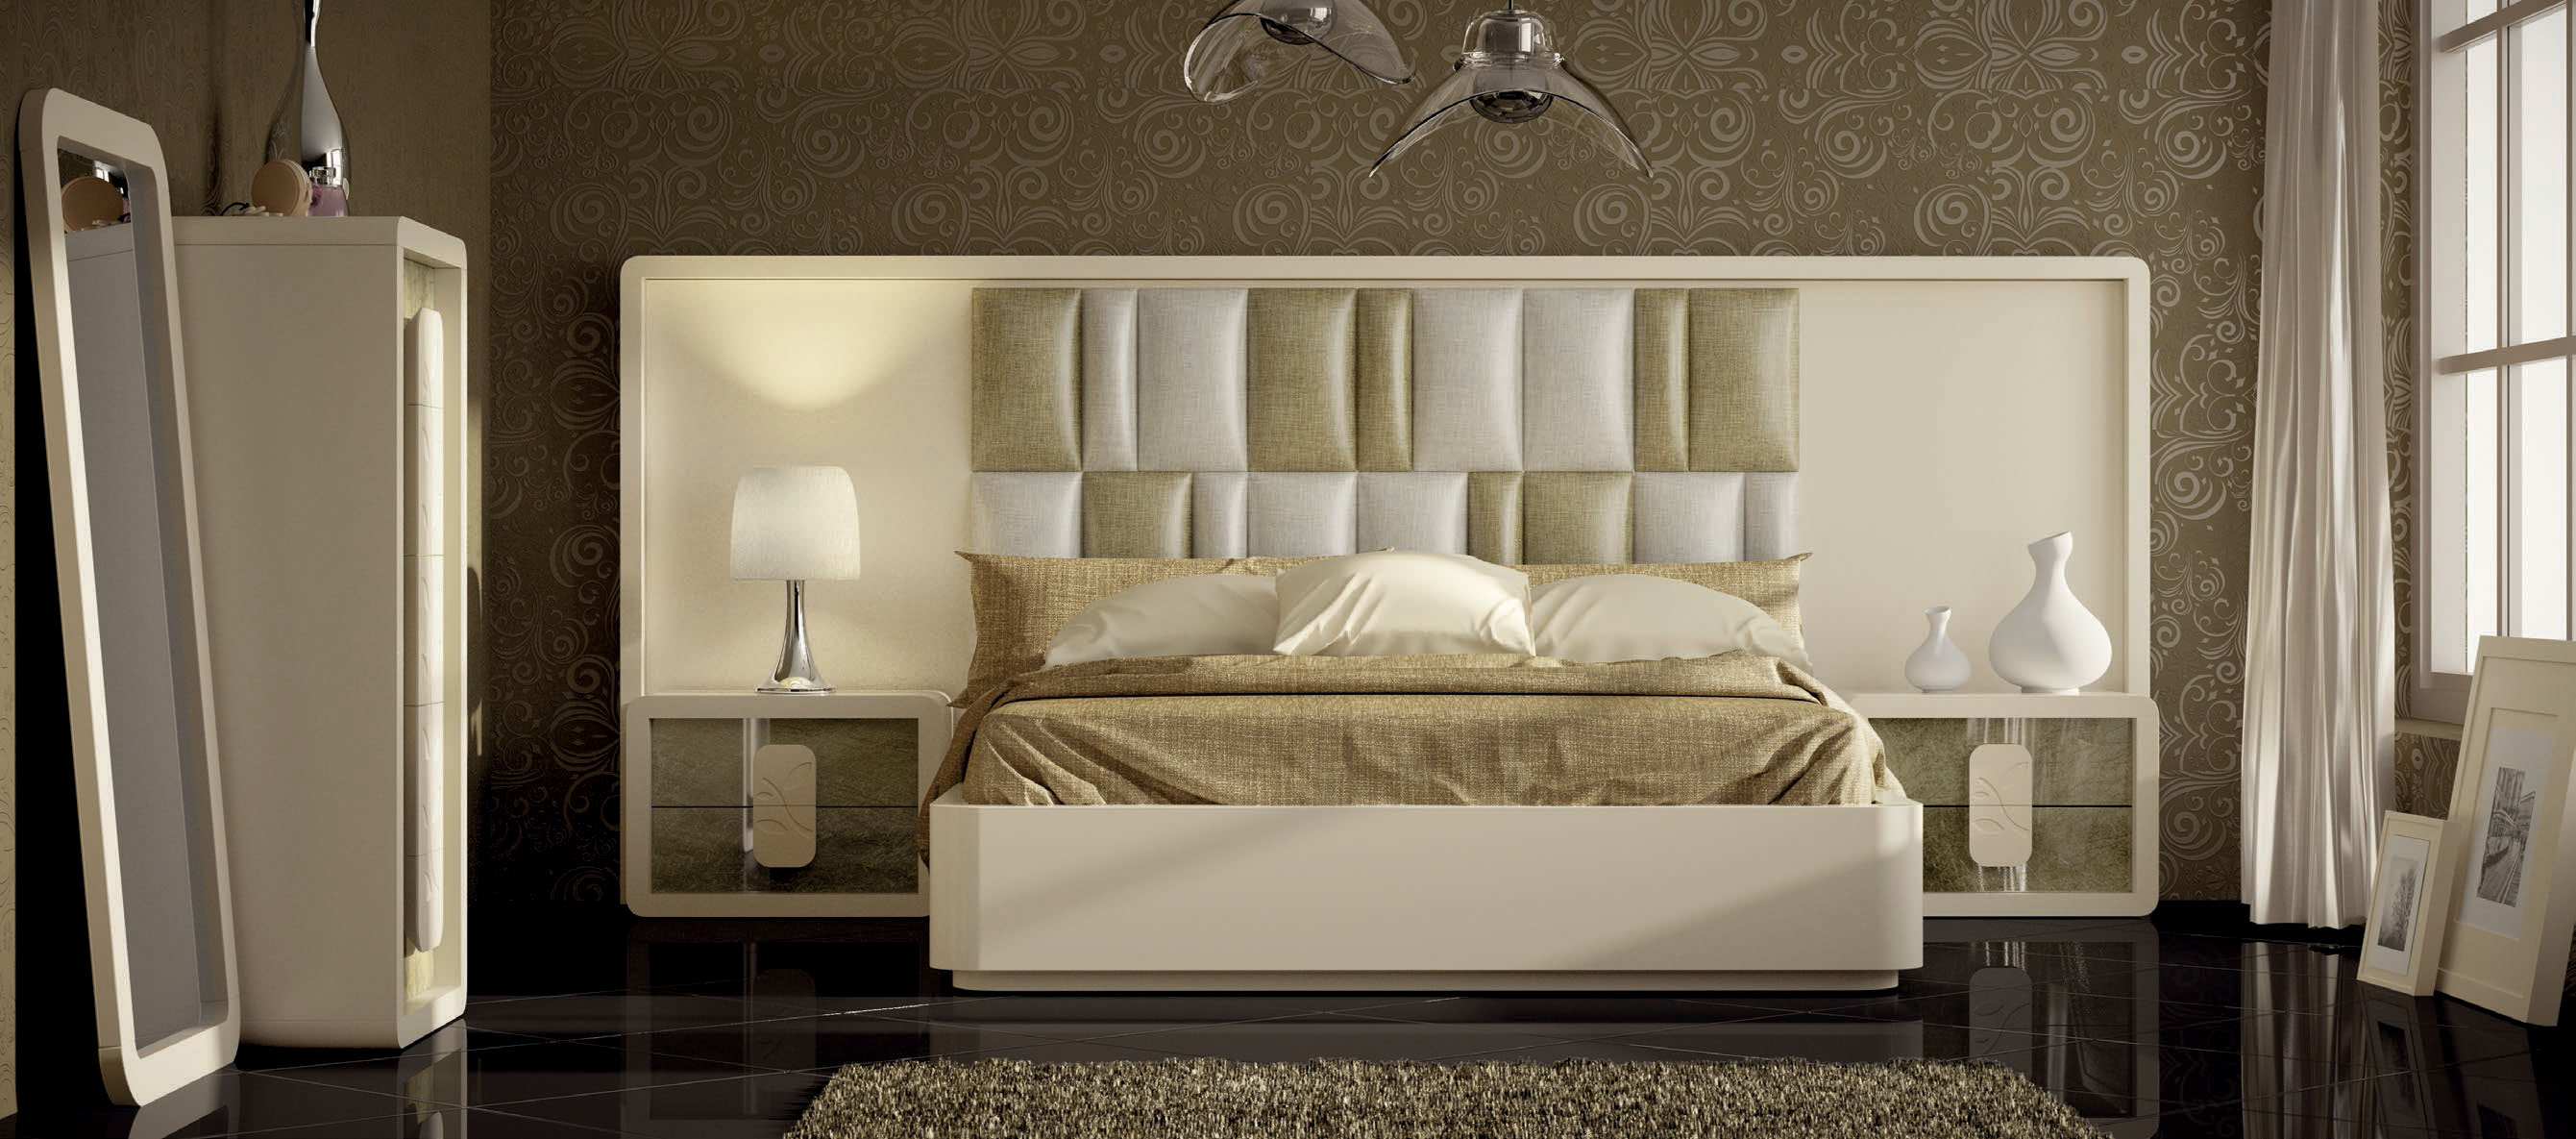 Brands Franco Furniture Bedrooms vol3, Spain DOR 171